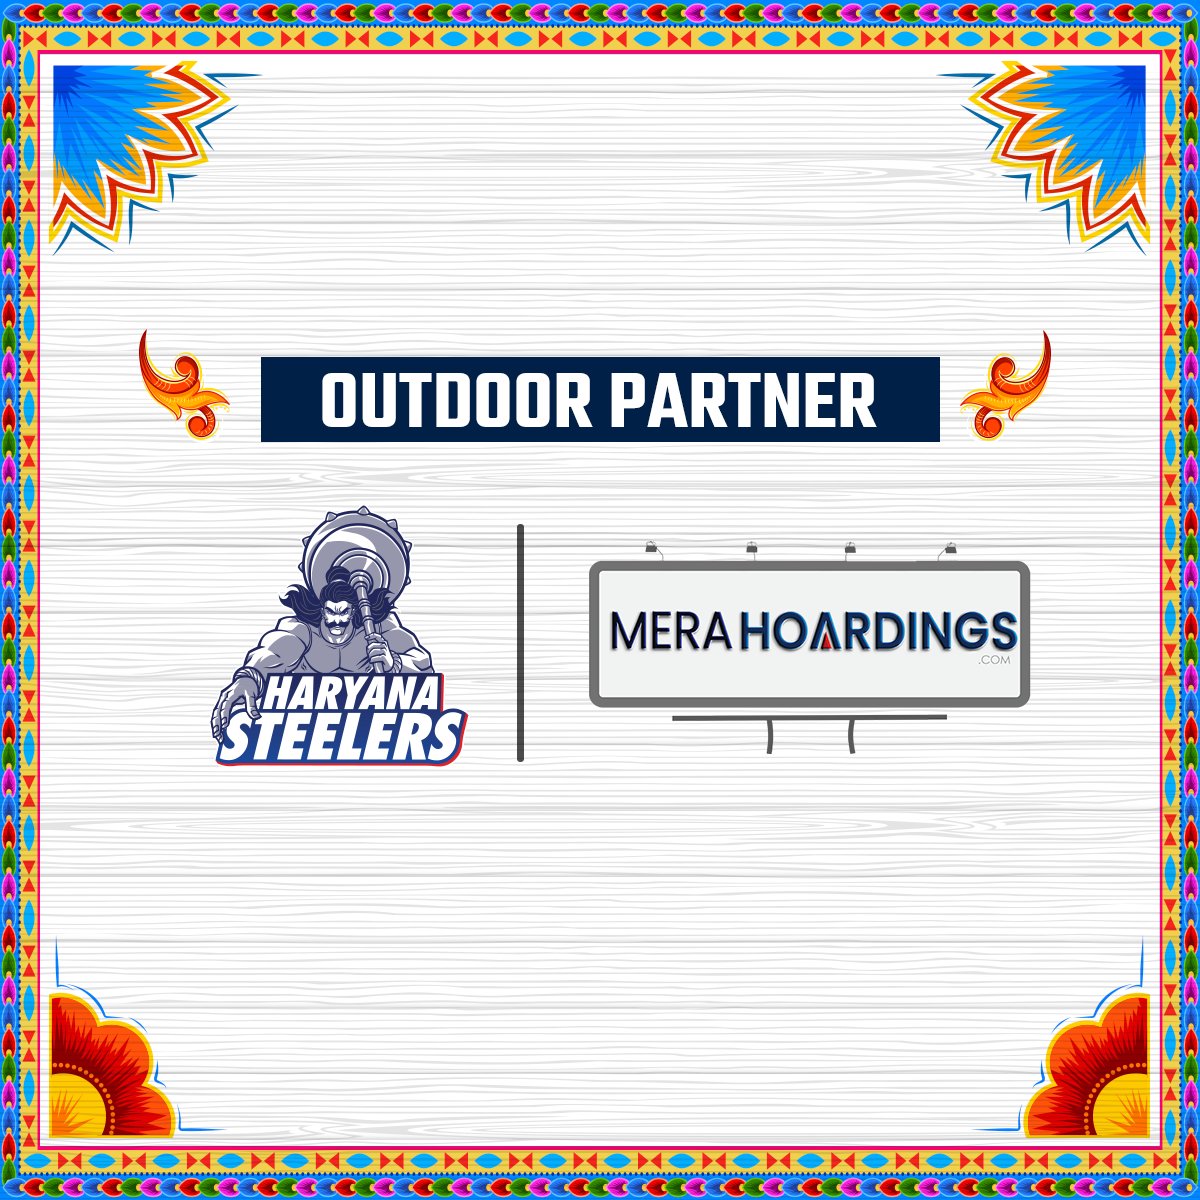 एक साथी जो हर क्षण को शानदार बनाए 🥳

Welcome Mera Hoardings, our Outdoor Partners for the season 🙌

#DhaakadBoys #NonStopHaryanvi @MeraHoardings